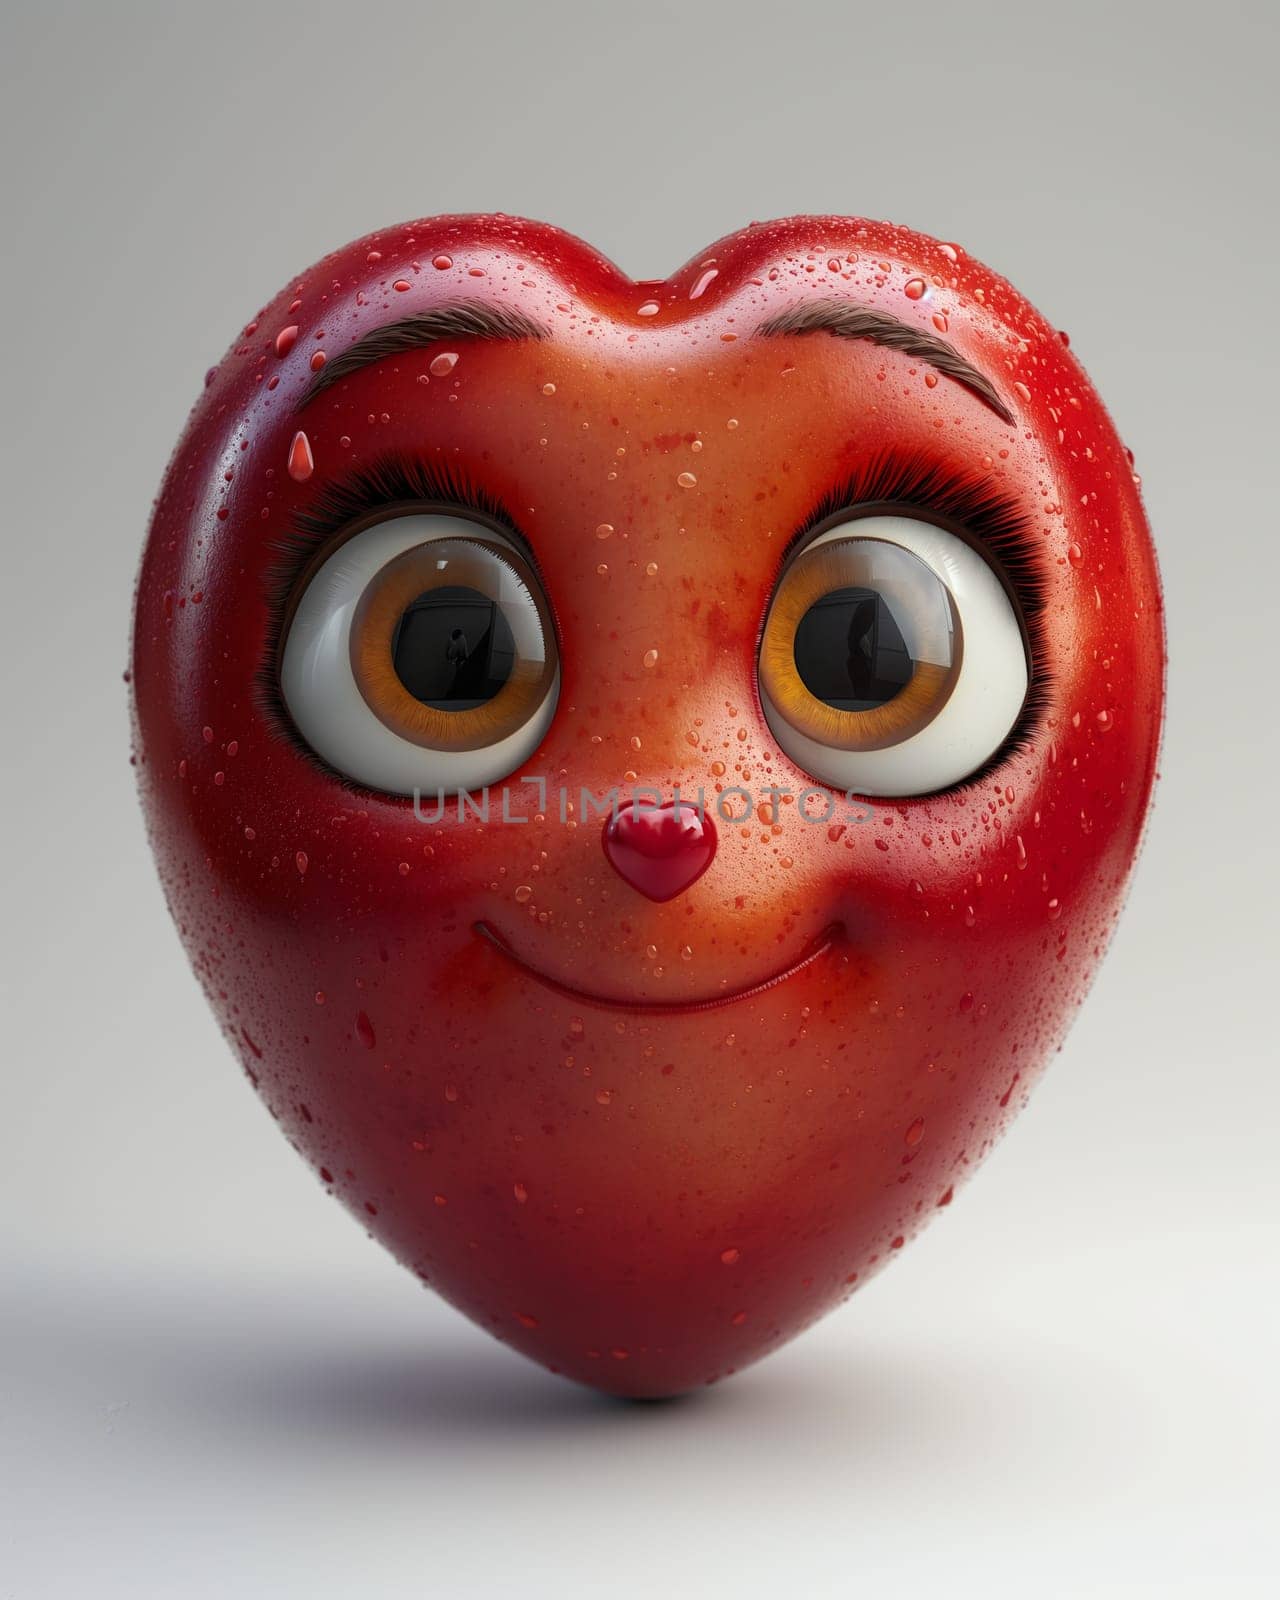 Cartoon, 3D, red heart shaped character. by Fischeron